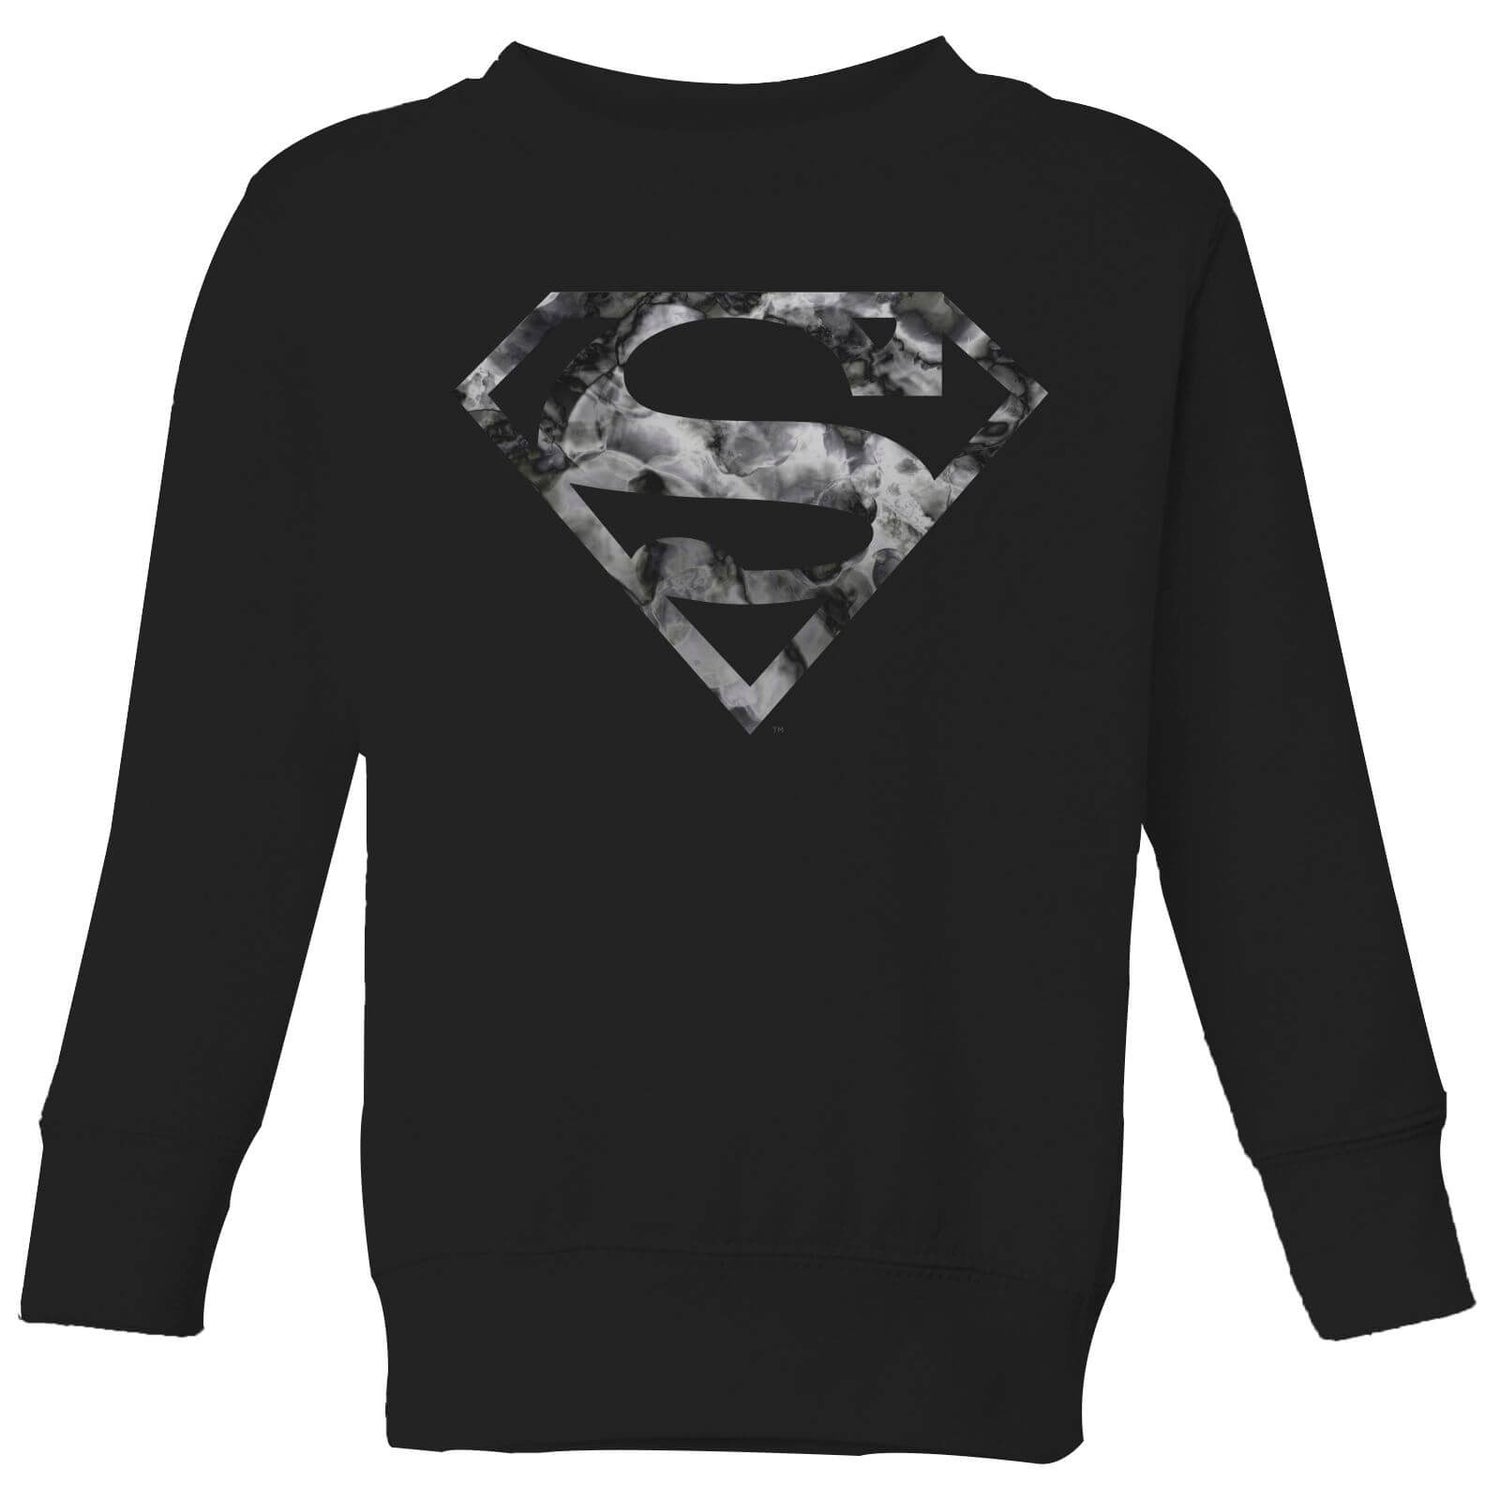 Marble Superman Logo Kids' Sweatshirt - Black